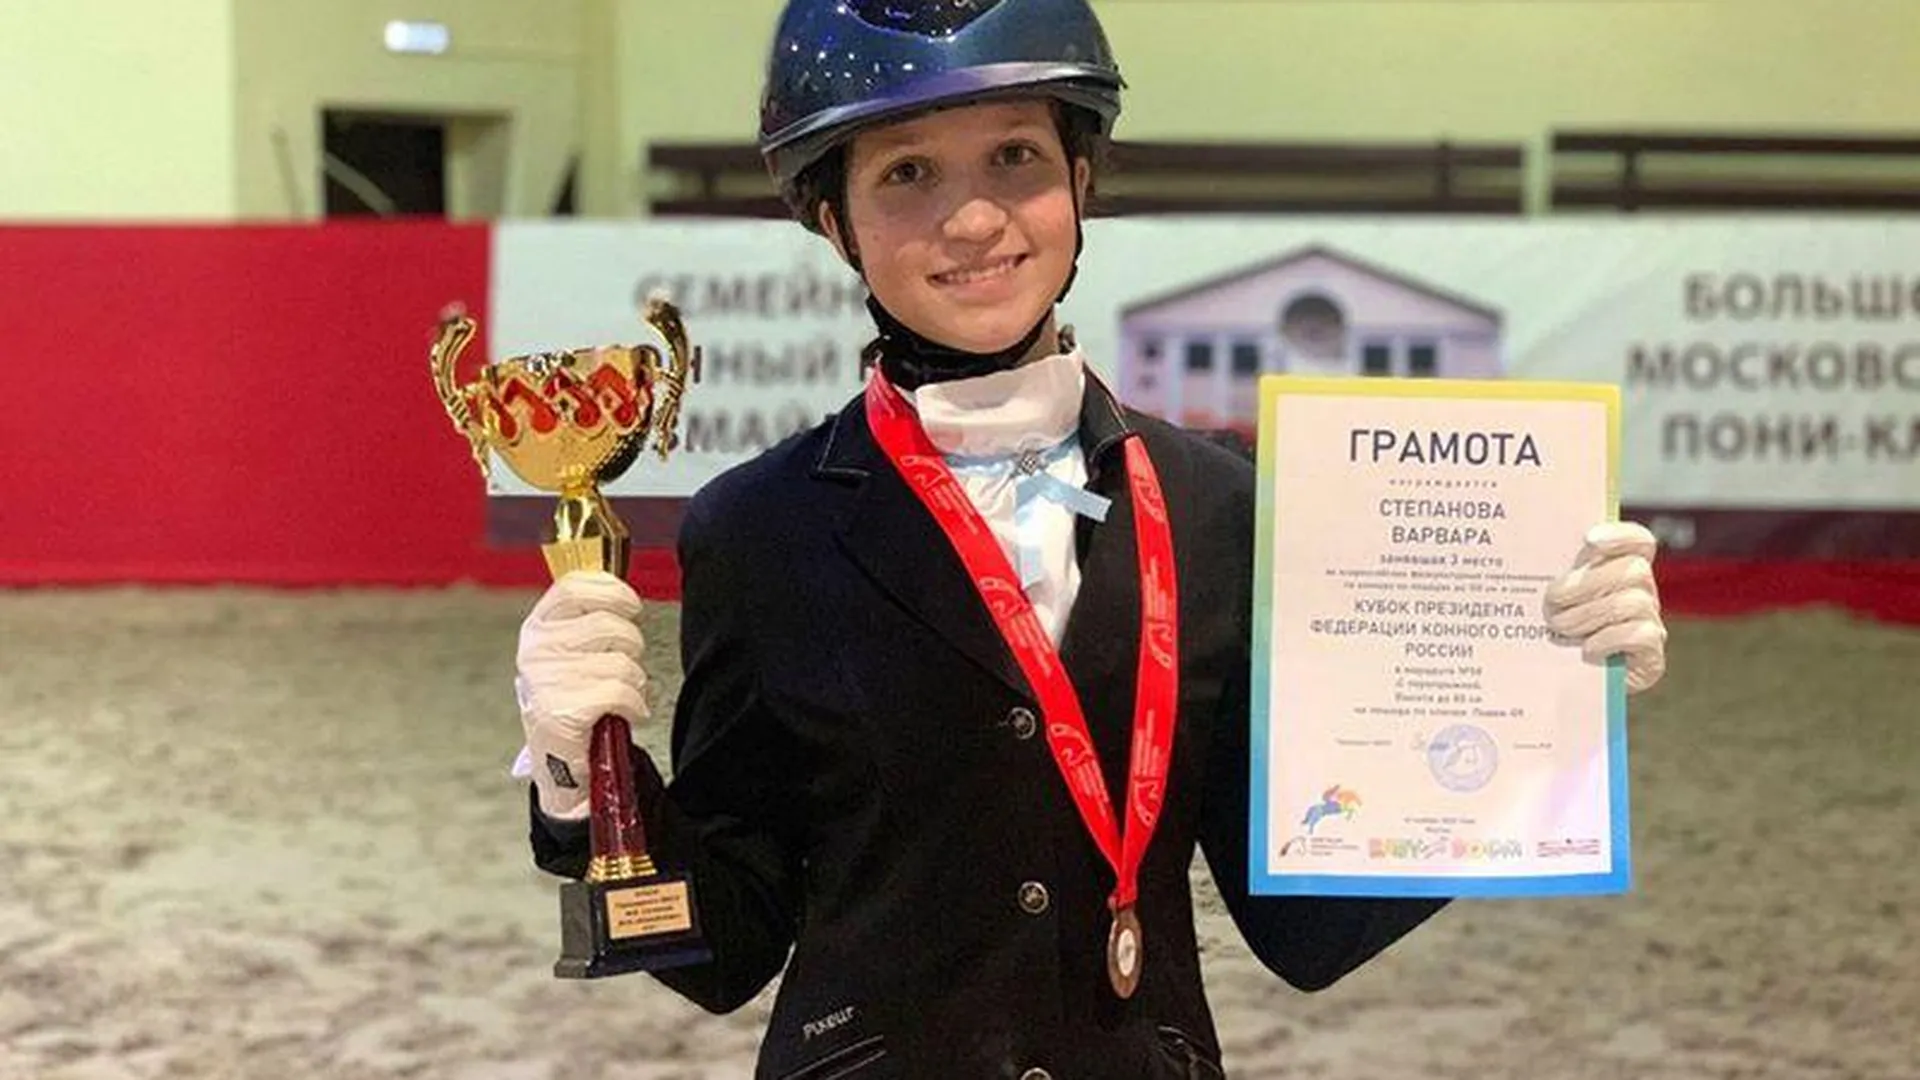 Варвара Степанова стала призером Кубка Президента Федерации конного спорта РФ